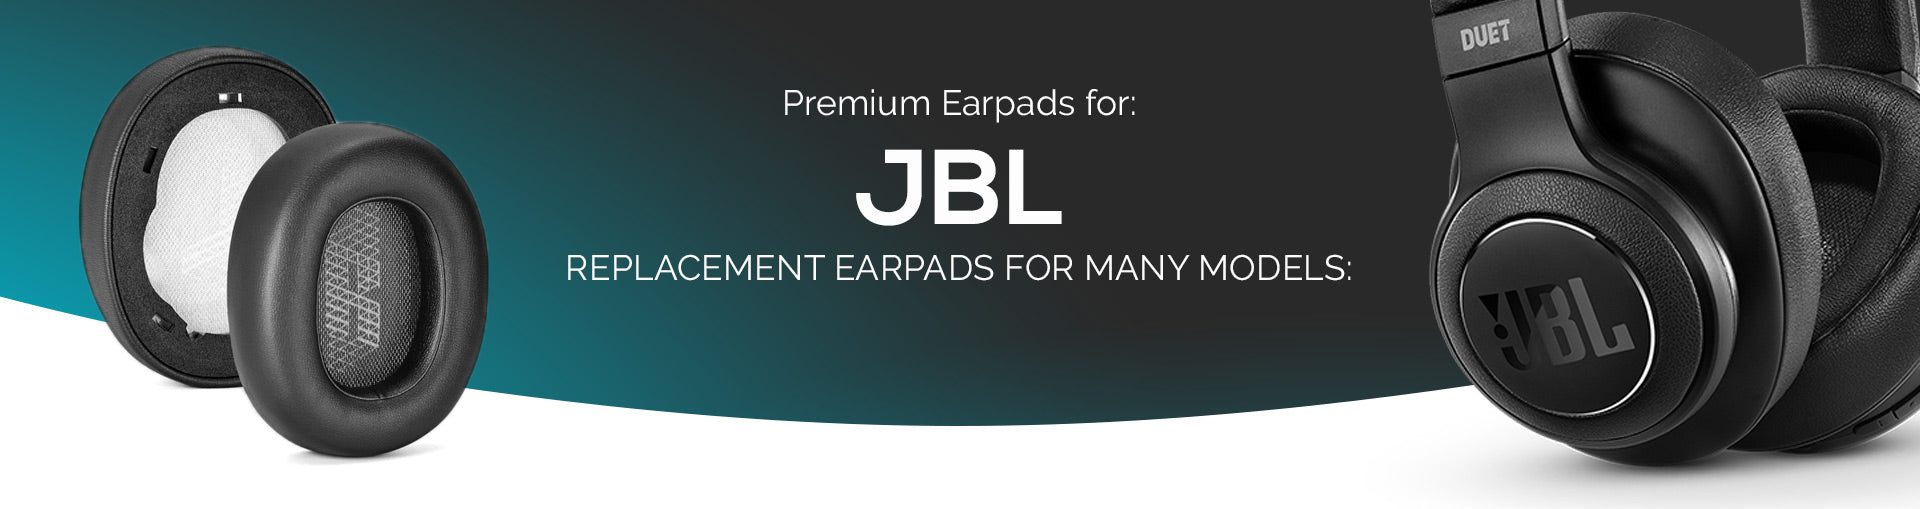 Earpads for JBL Headphones